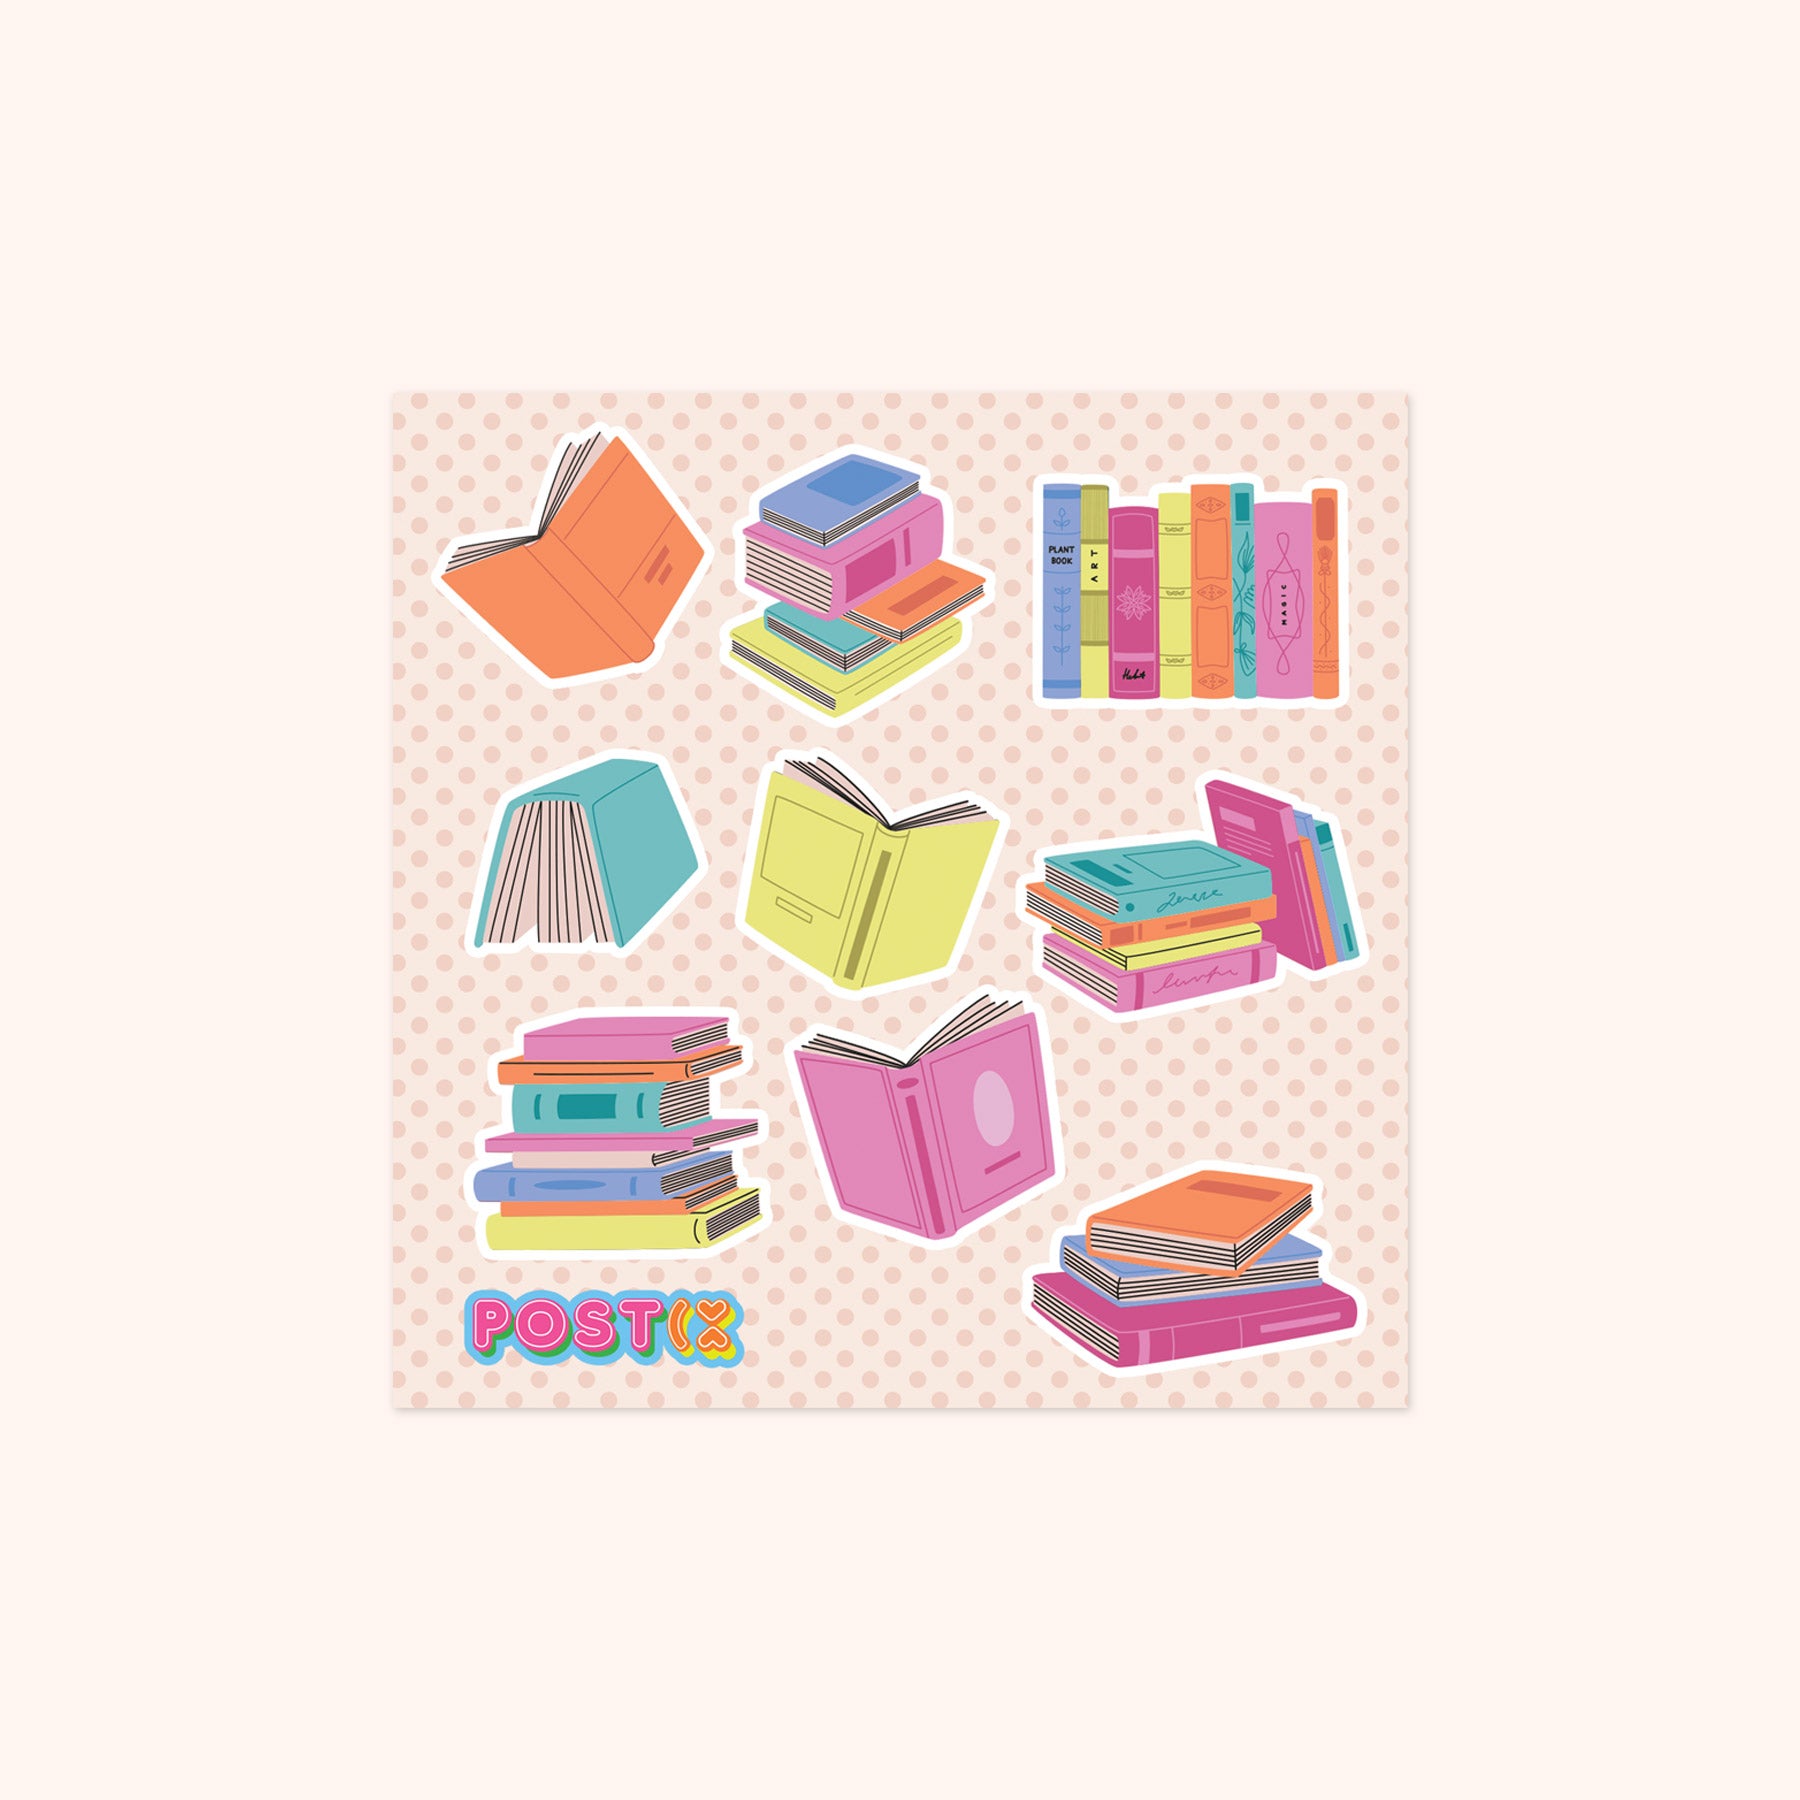 The Book Club Square Sticker Sheet